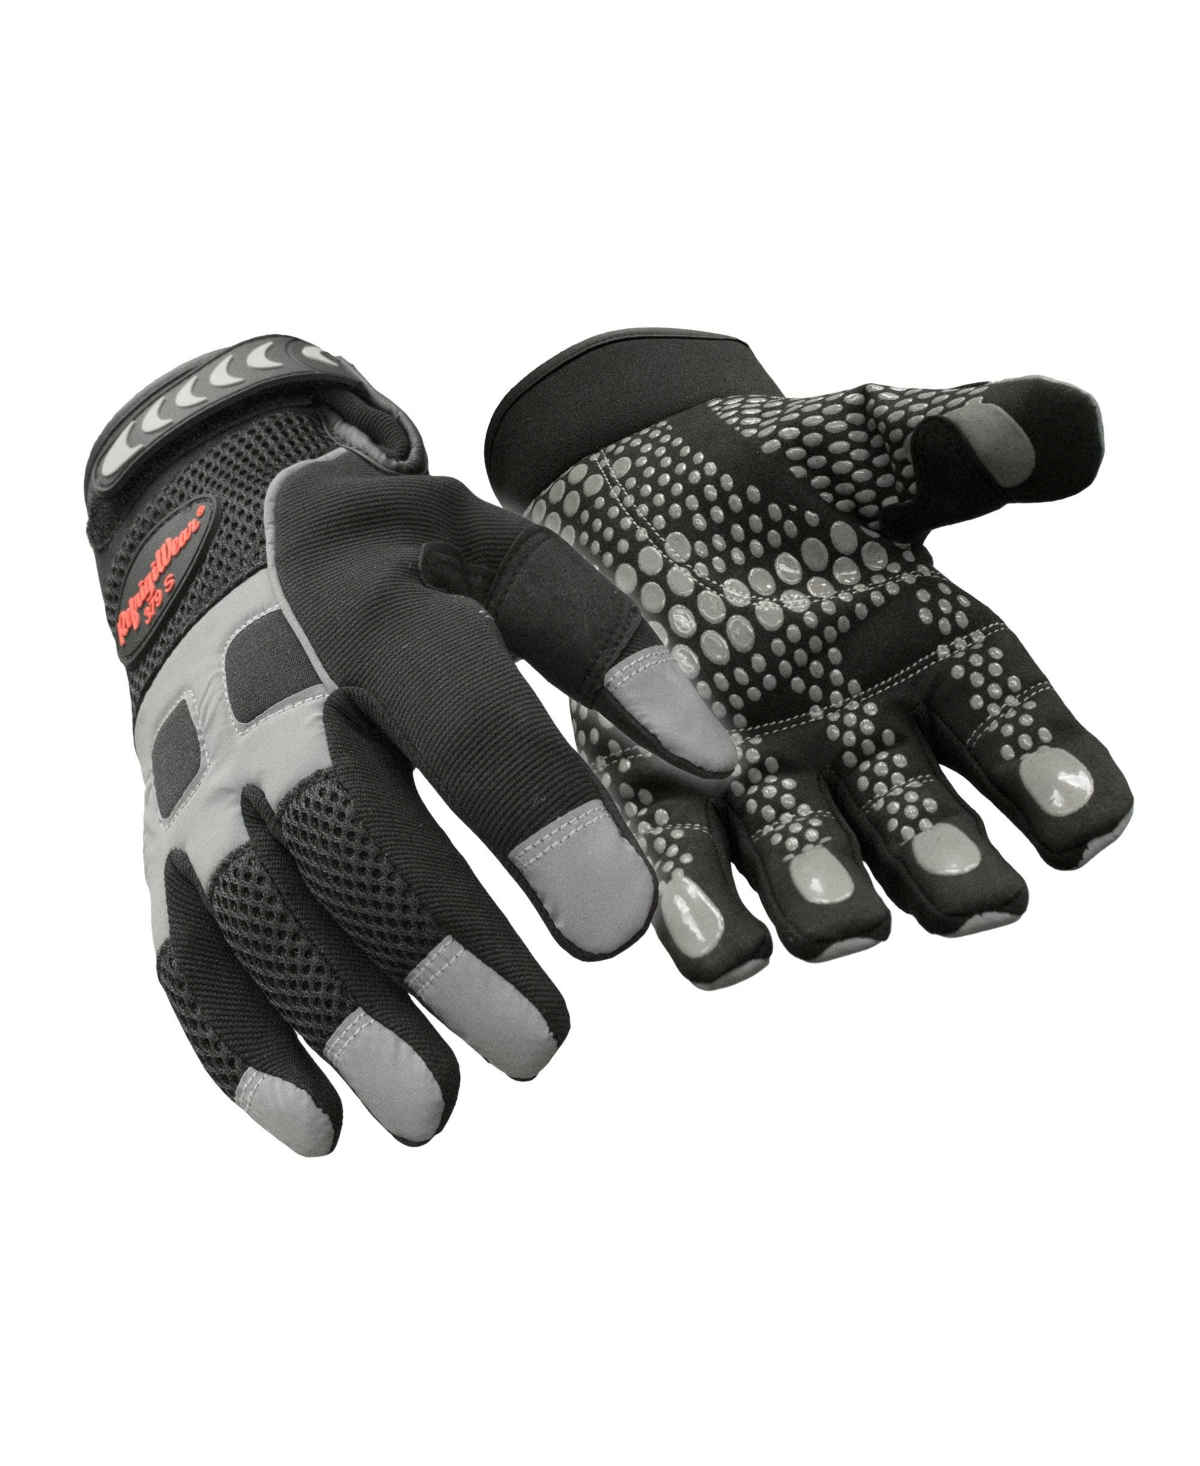 Refrigiwear Warm Dual Layer Thermal Ergo Grip Work Gloves With